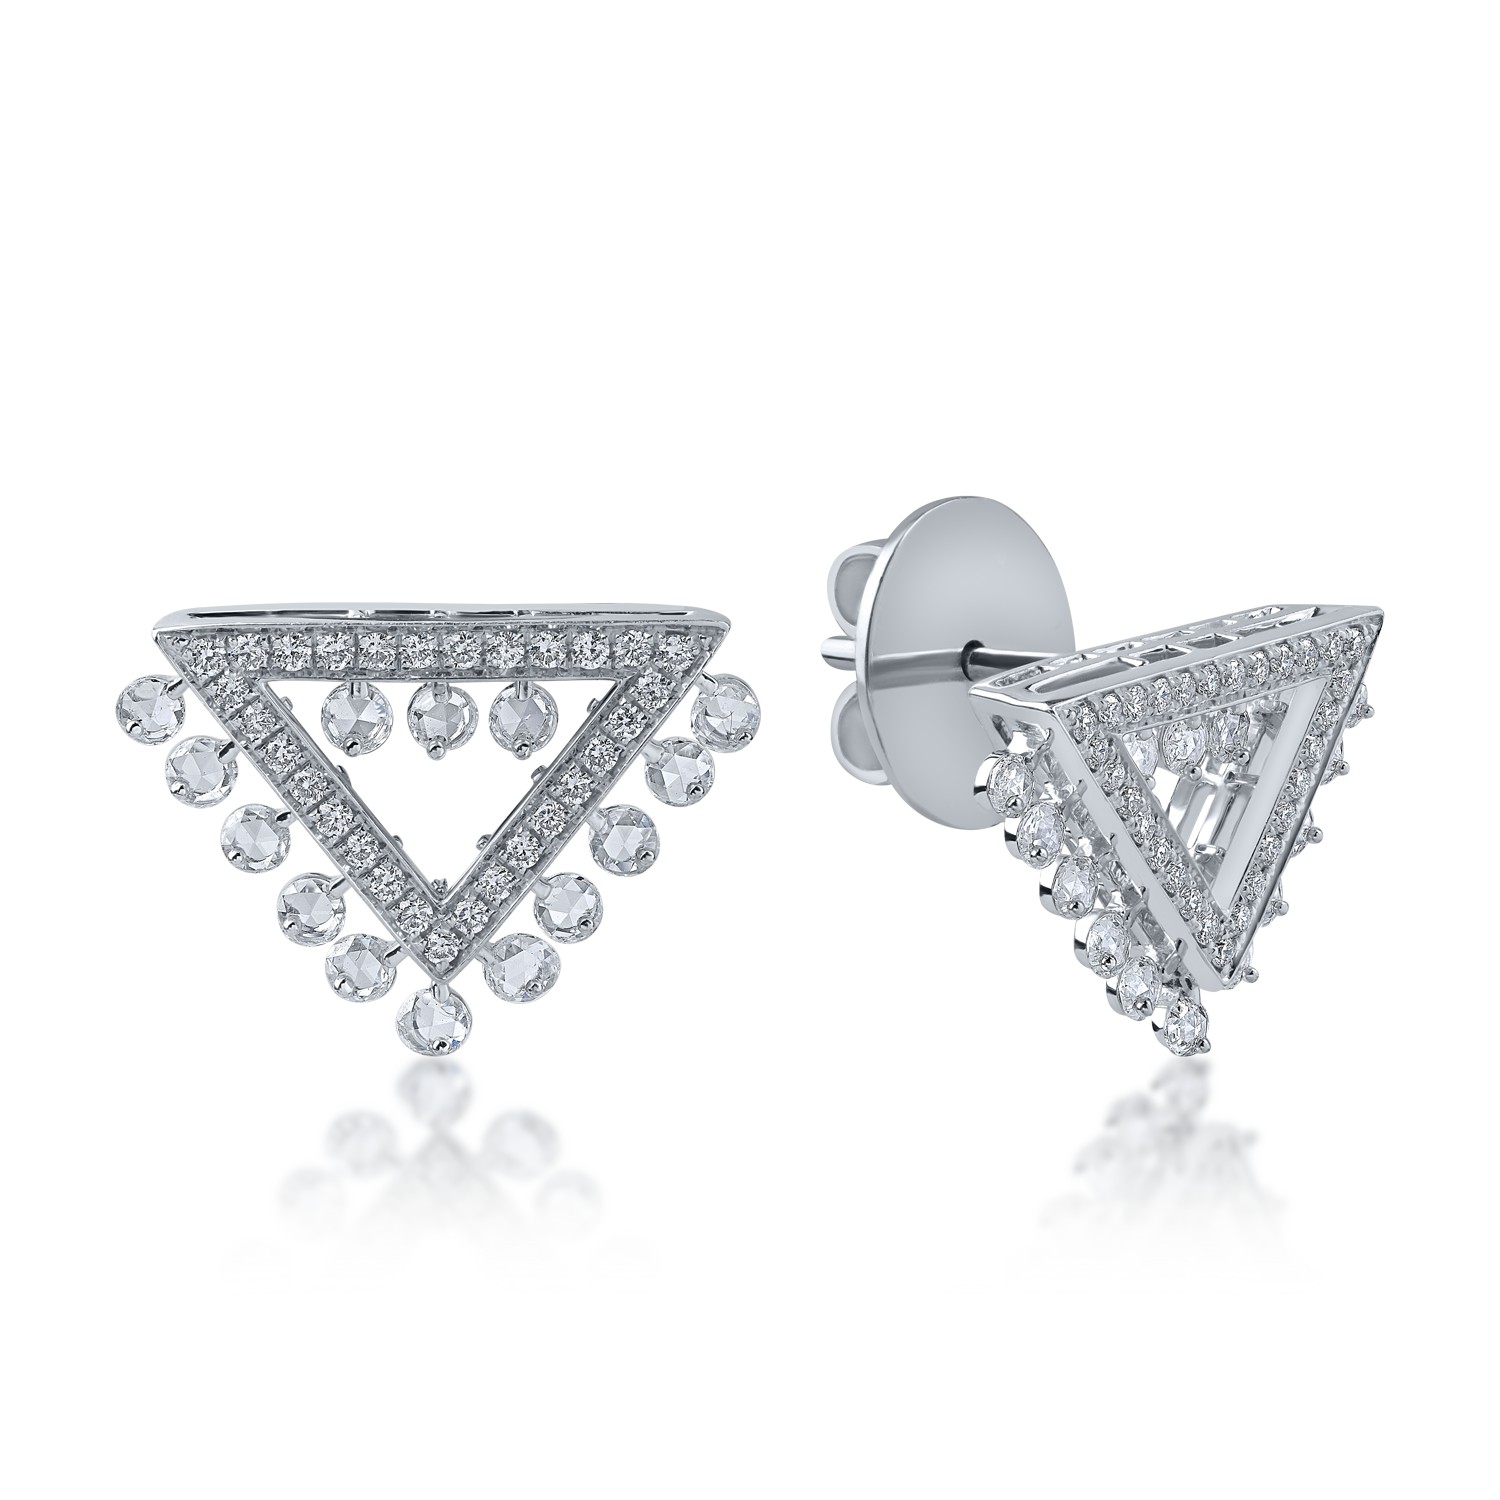 White gold geometric earrings with 0.83ct diamonds